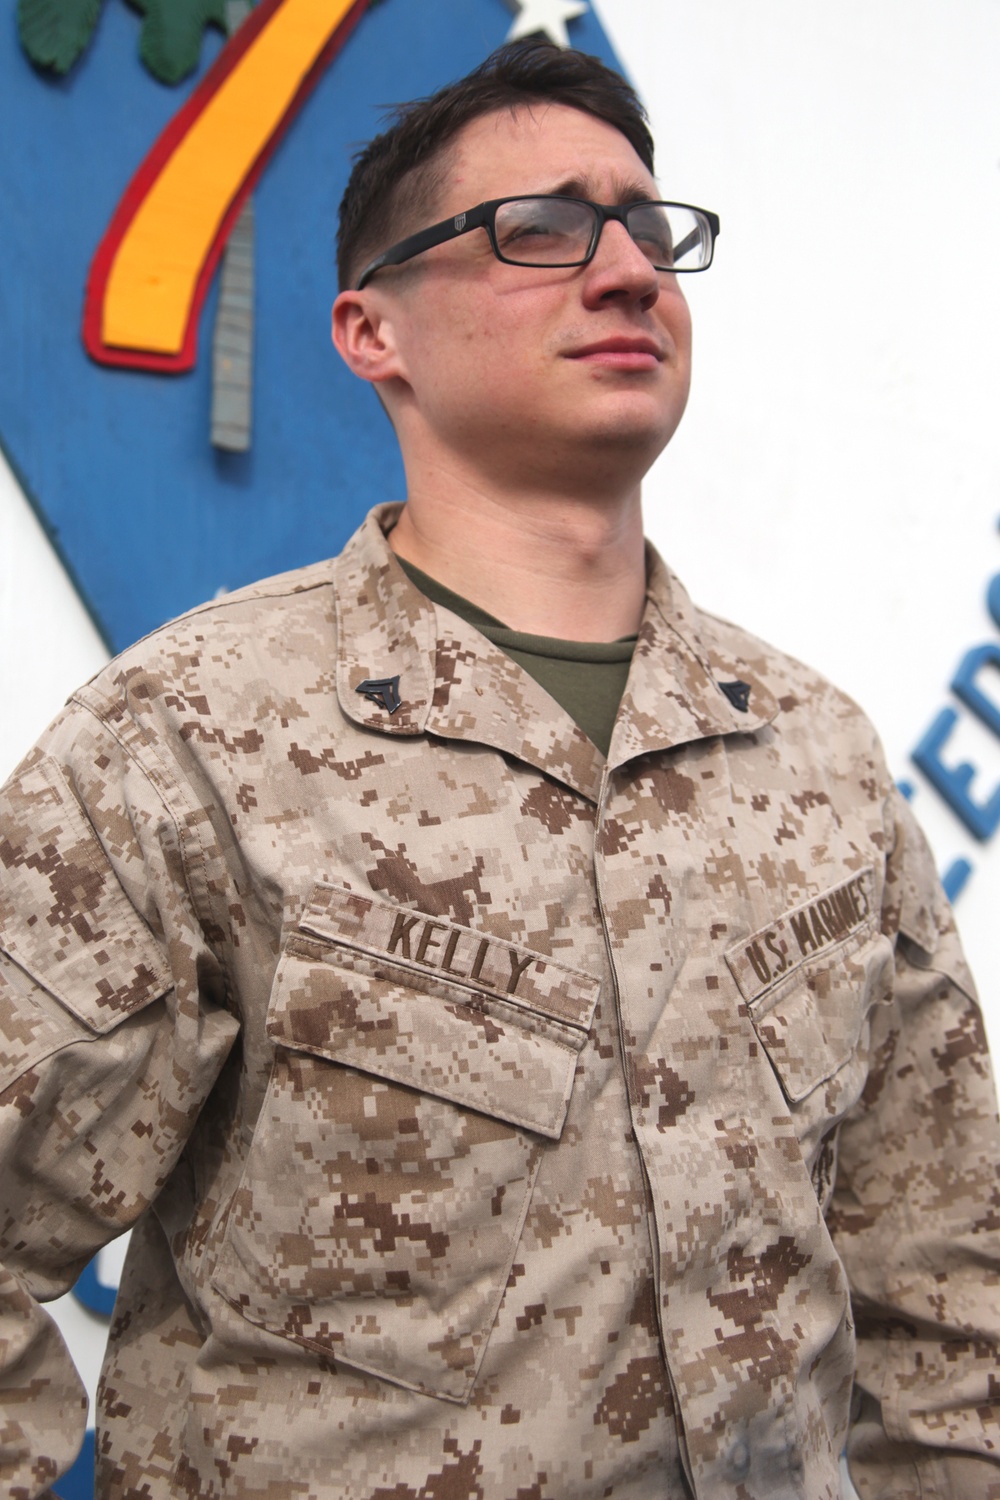 History major, Neb. Marine inspires others